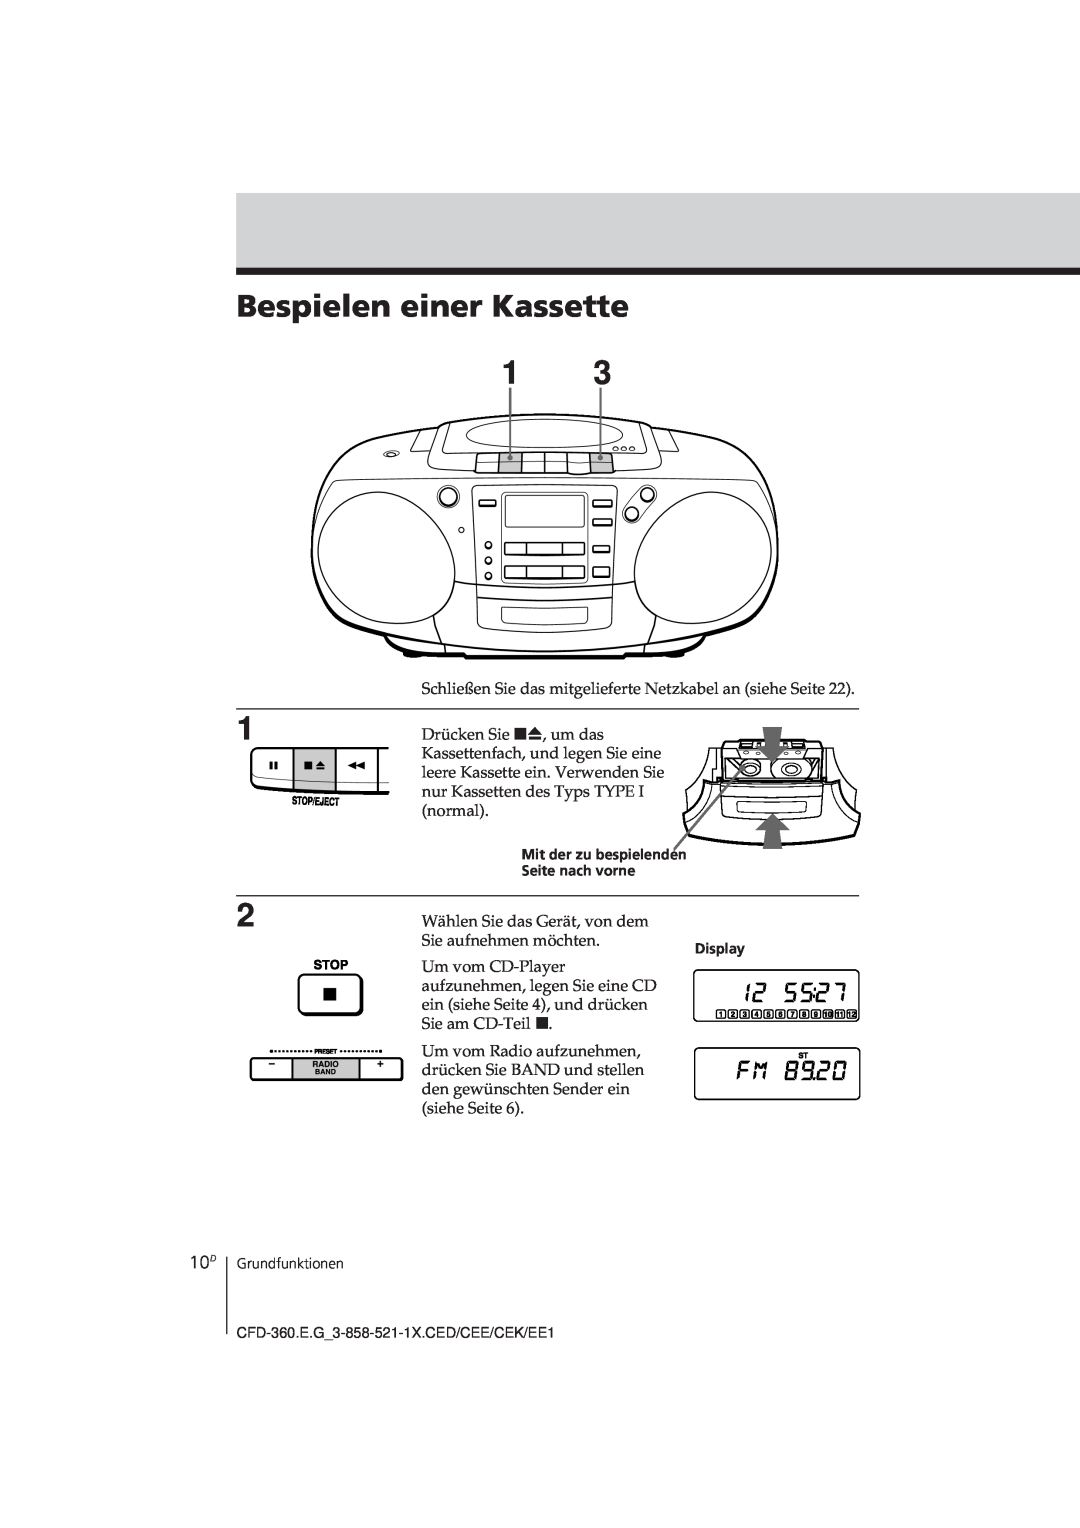 Sony CFD-360 operating instructions Bespielen einer Kassette 